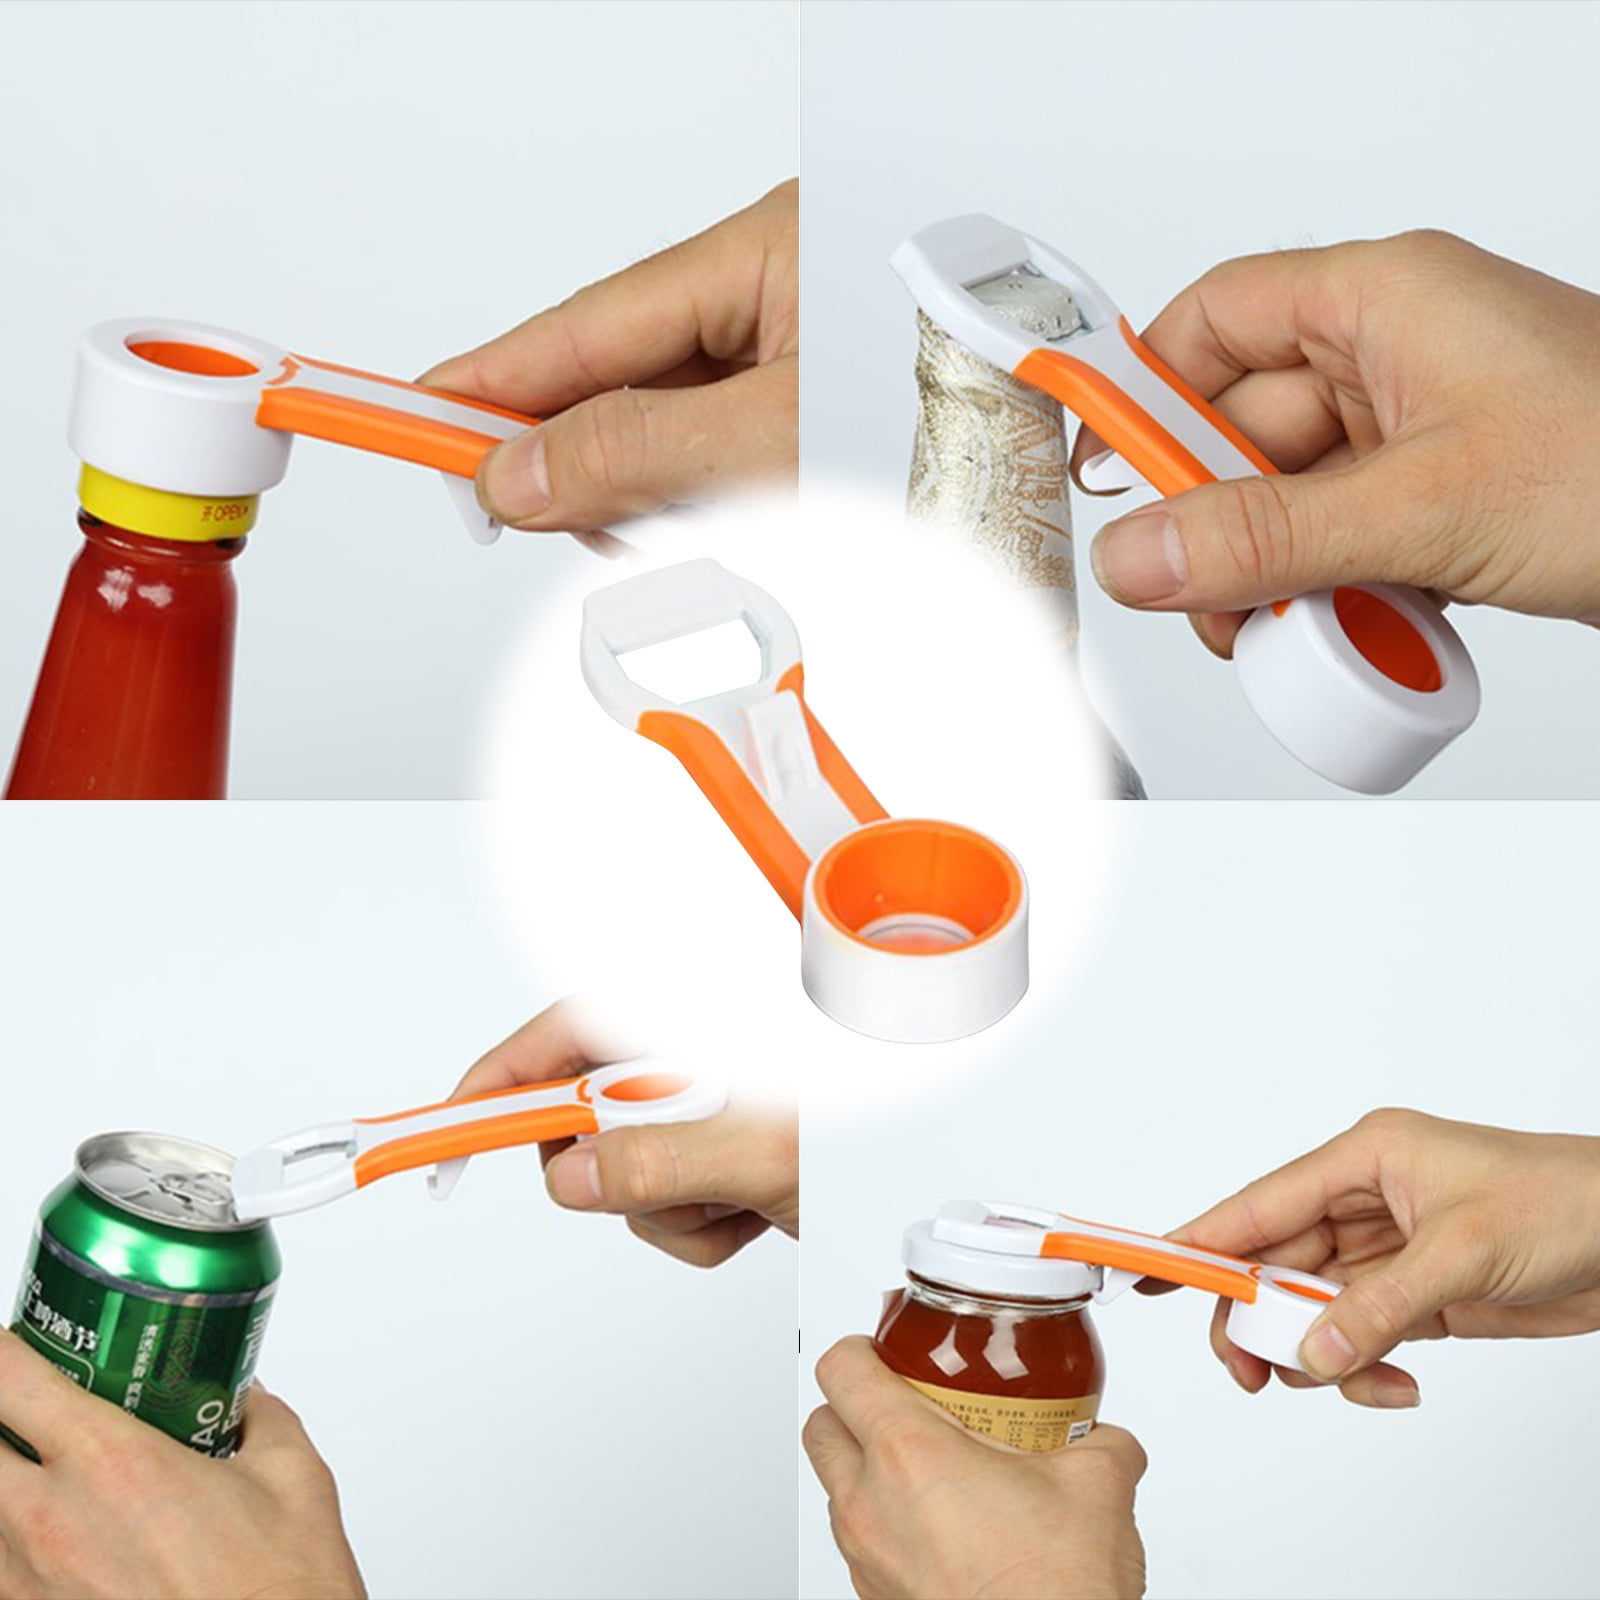 Jar Opener Rubber Quick Lid Bottle Cap Grip Twister Remover